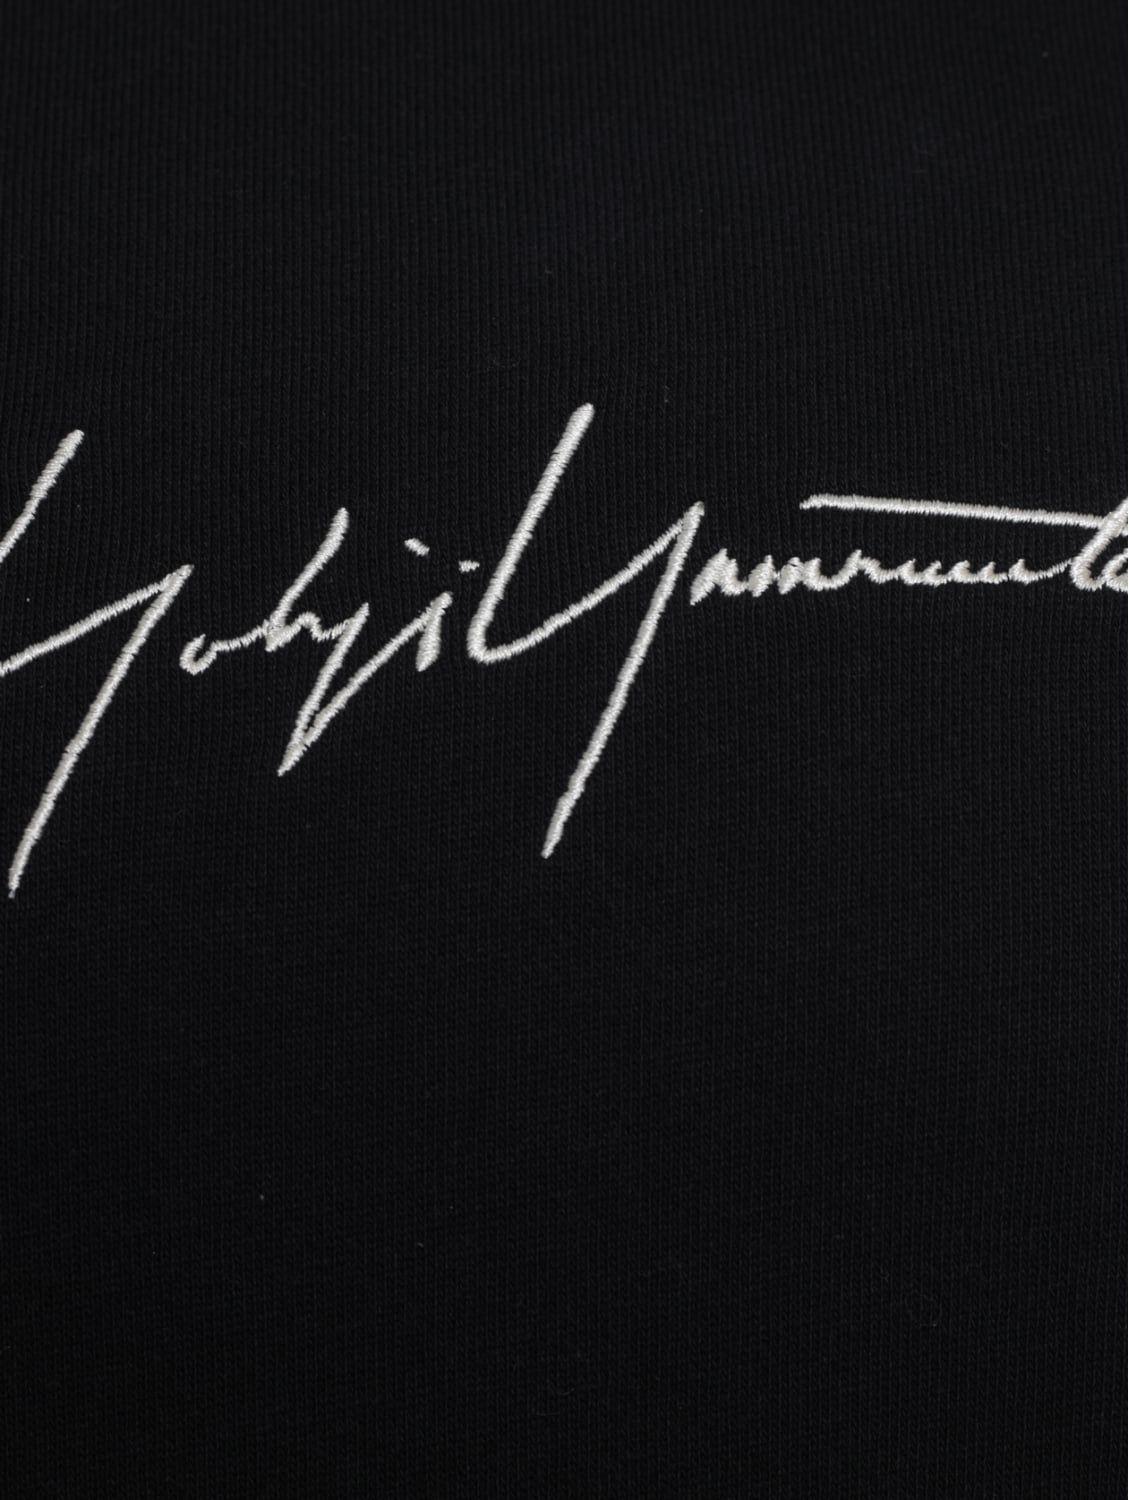 Yohji Yamamoto Logo - Yohji Yamamoto New Era Signature Logo Pullover Hoodie Black | Hervia ...